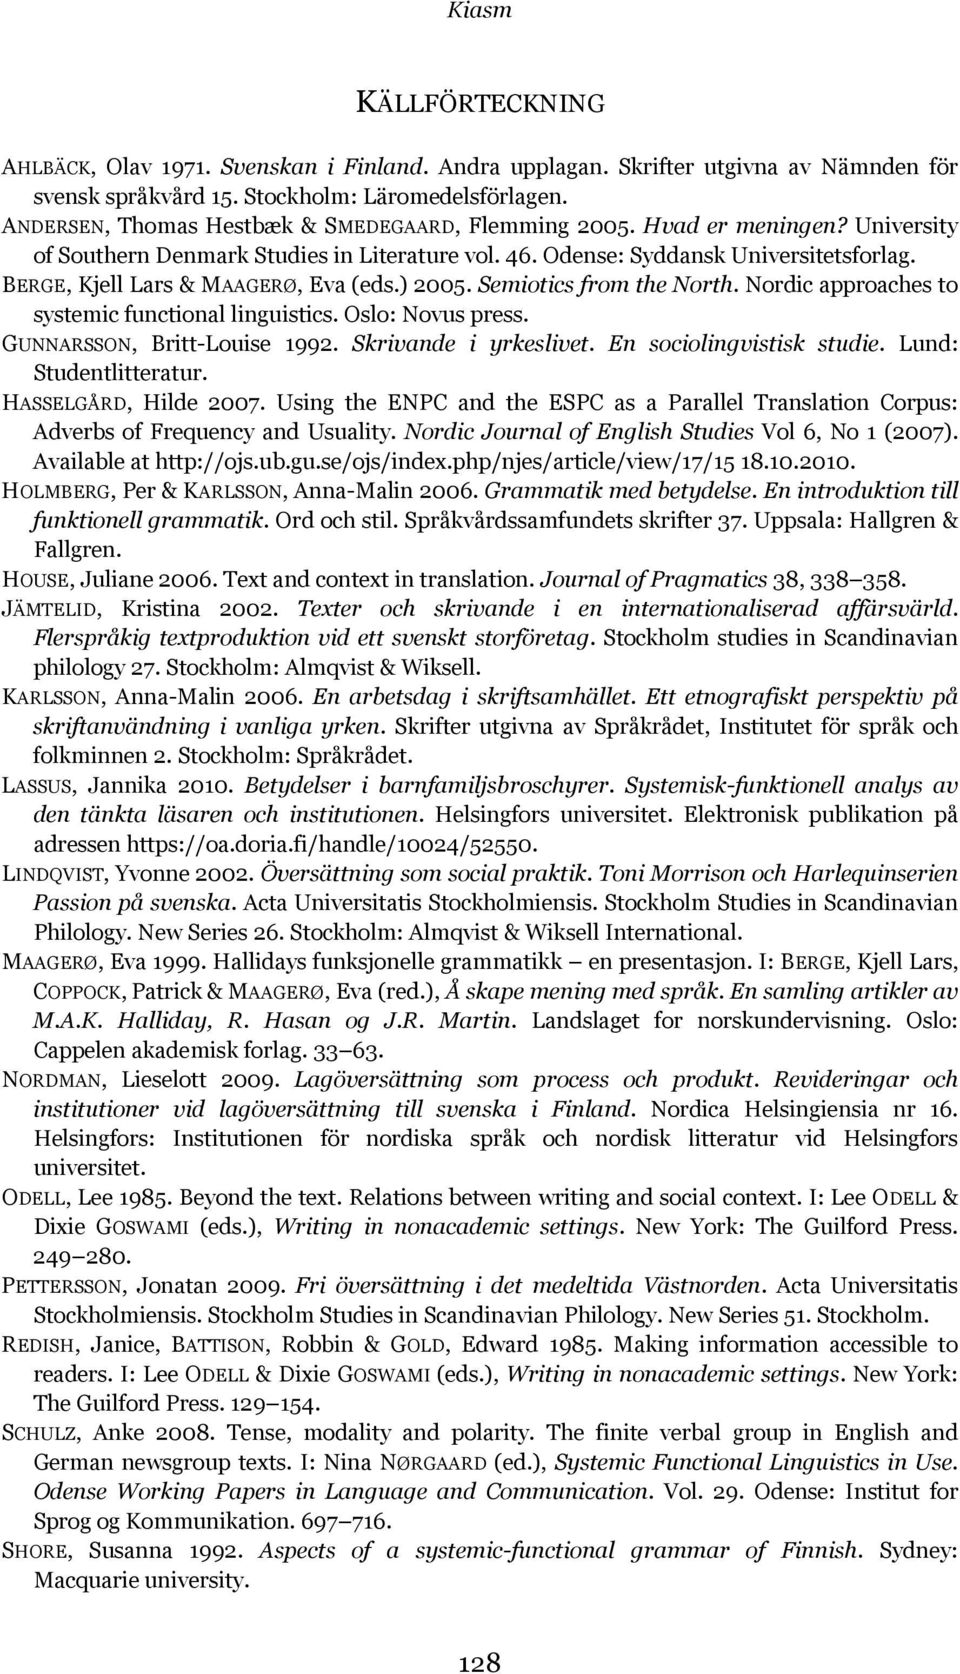 BERGE, Kjell Lars & MAAGERØ, Eva (eds.) 2005. Semiotics from the North. Nordic approaches to systemic functional linguistics. Oslo: Novus press. GUNNARSSON, Britt-Louise 1992. Skrivande i yrkeslivet.